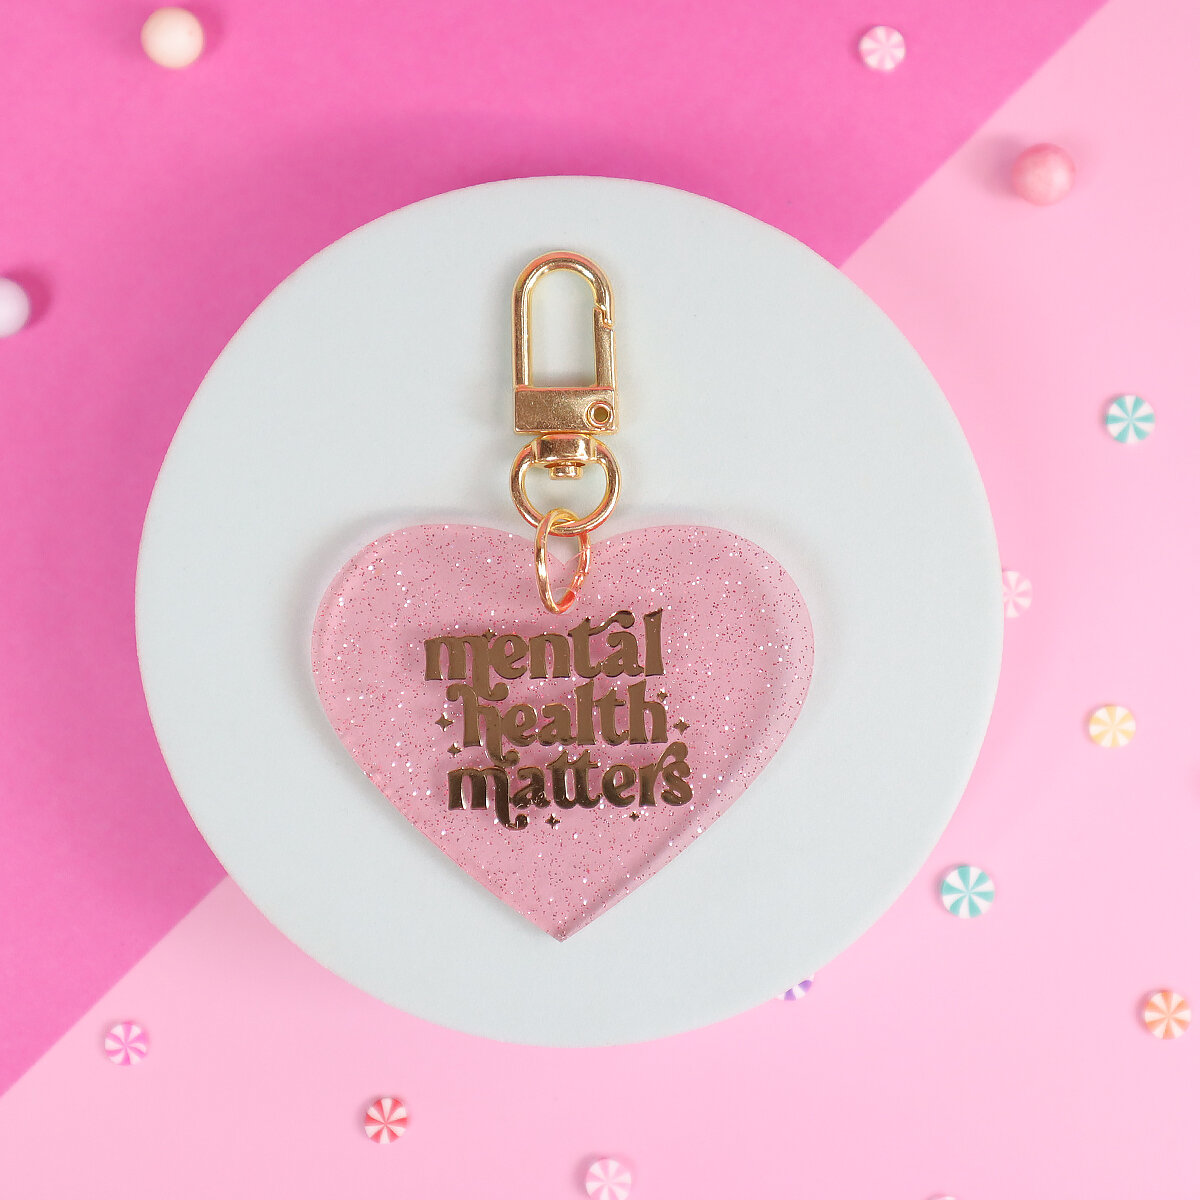 Glitter heart key ring - Mental health matters